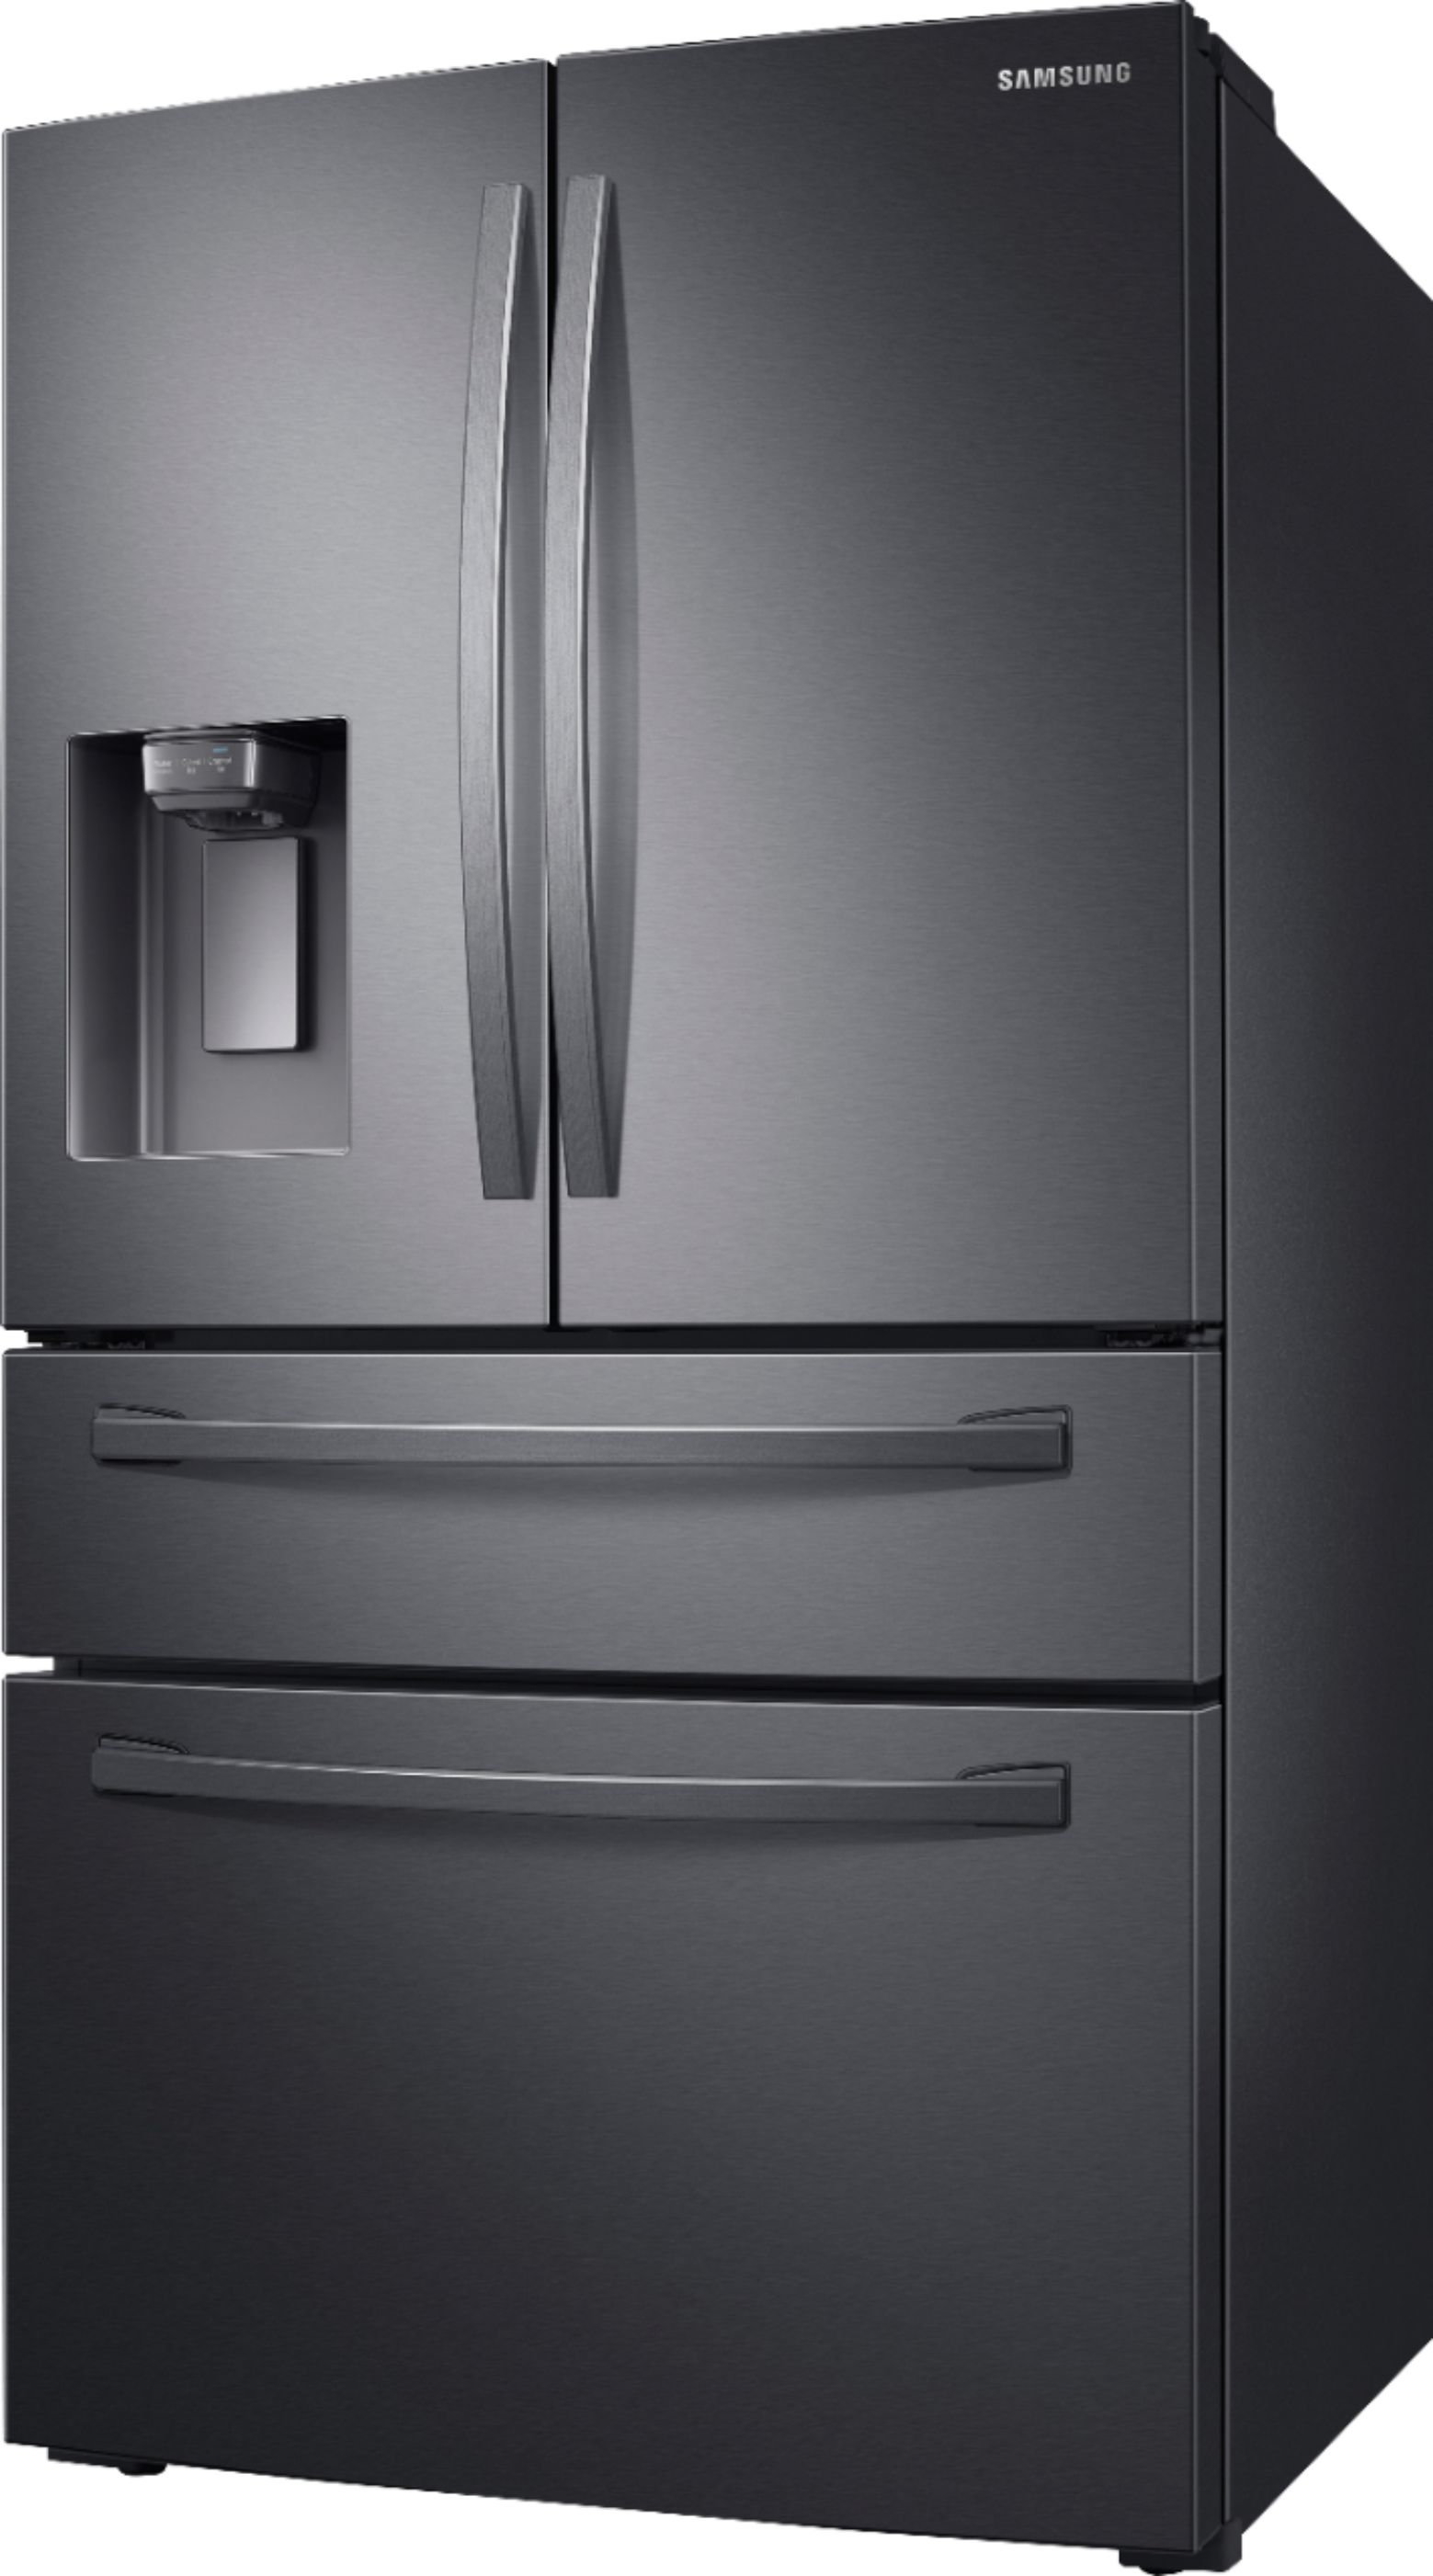 Left View: Samsung - 22.6 cu. ft. 4-Door French Door Counter Depth Refrigerator with FlexZone™ Drawer - Black stainless steel